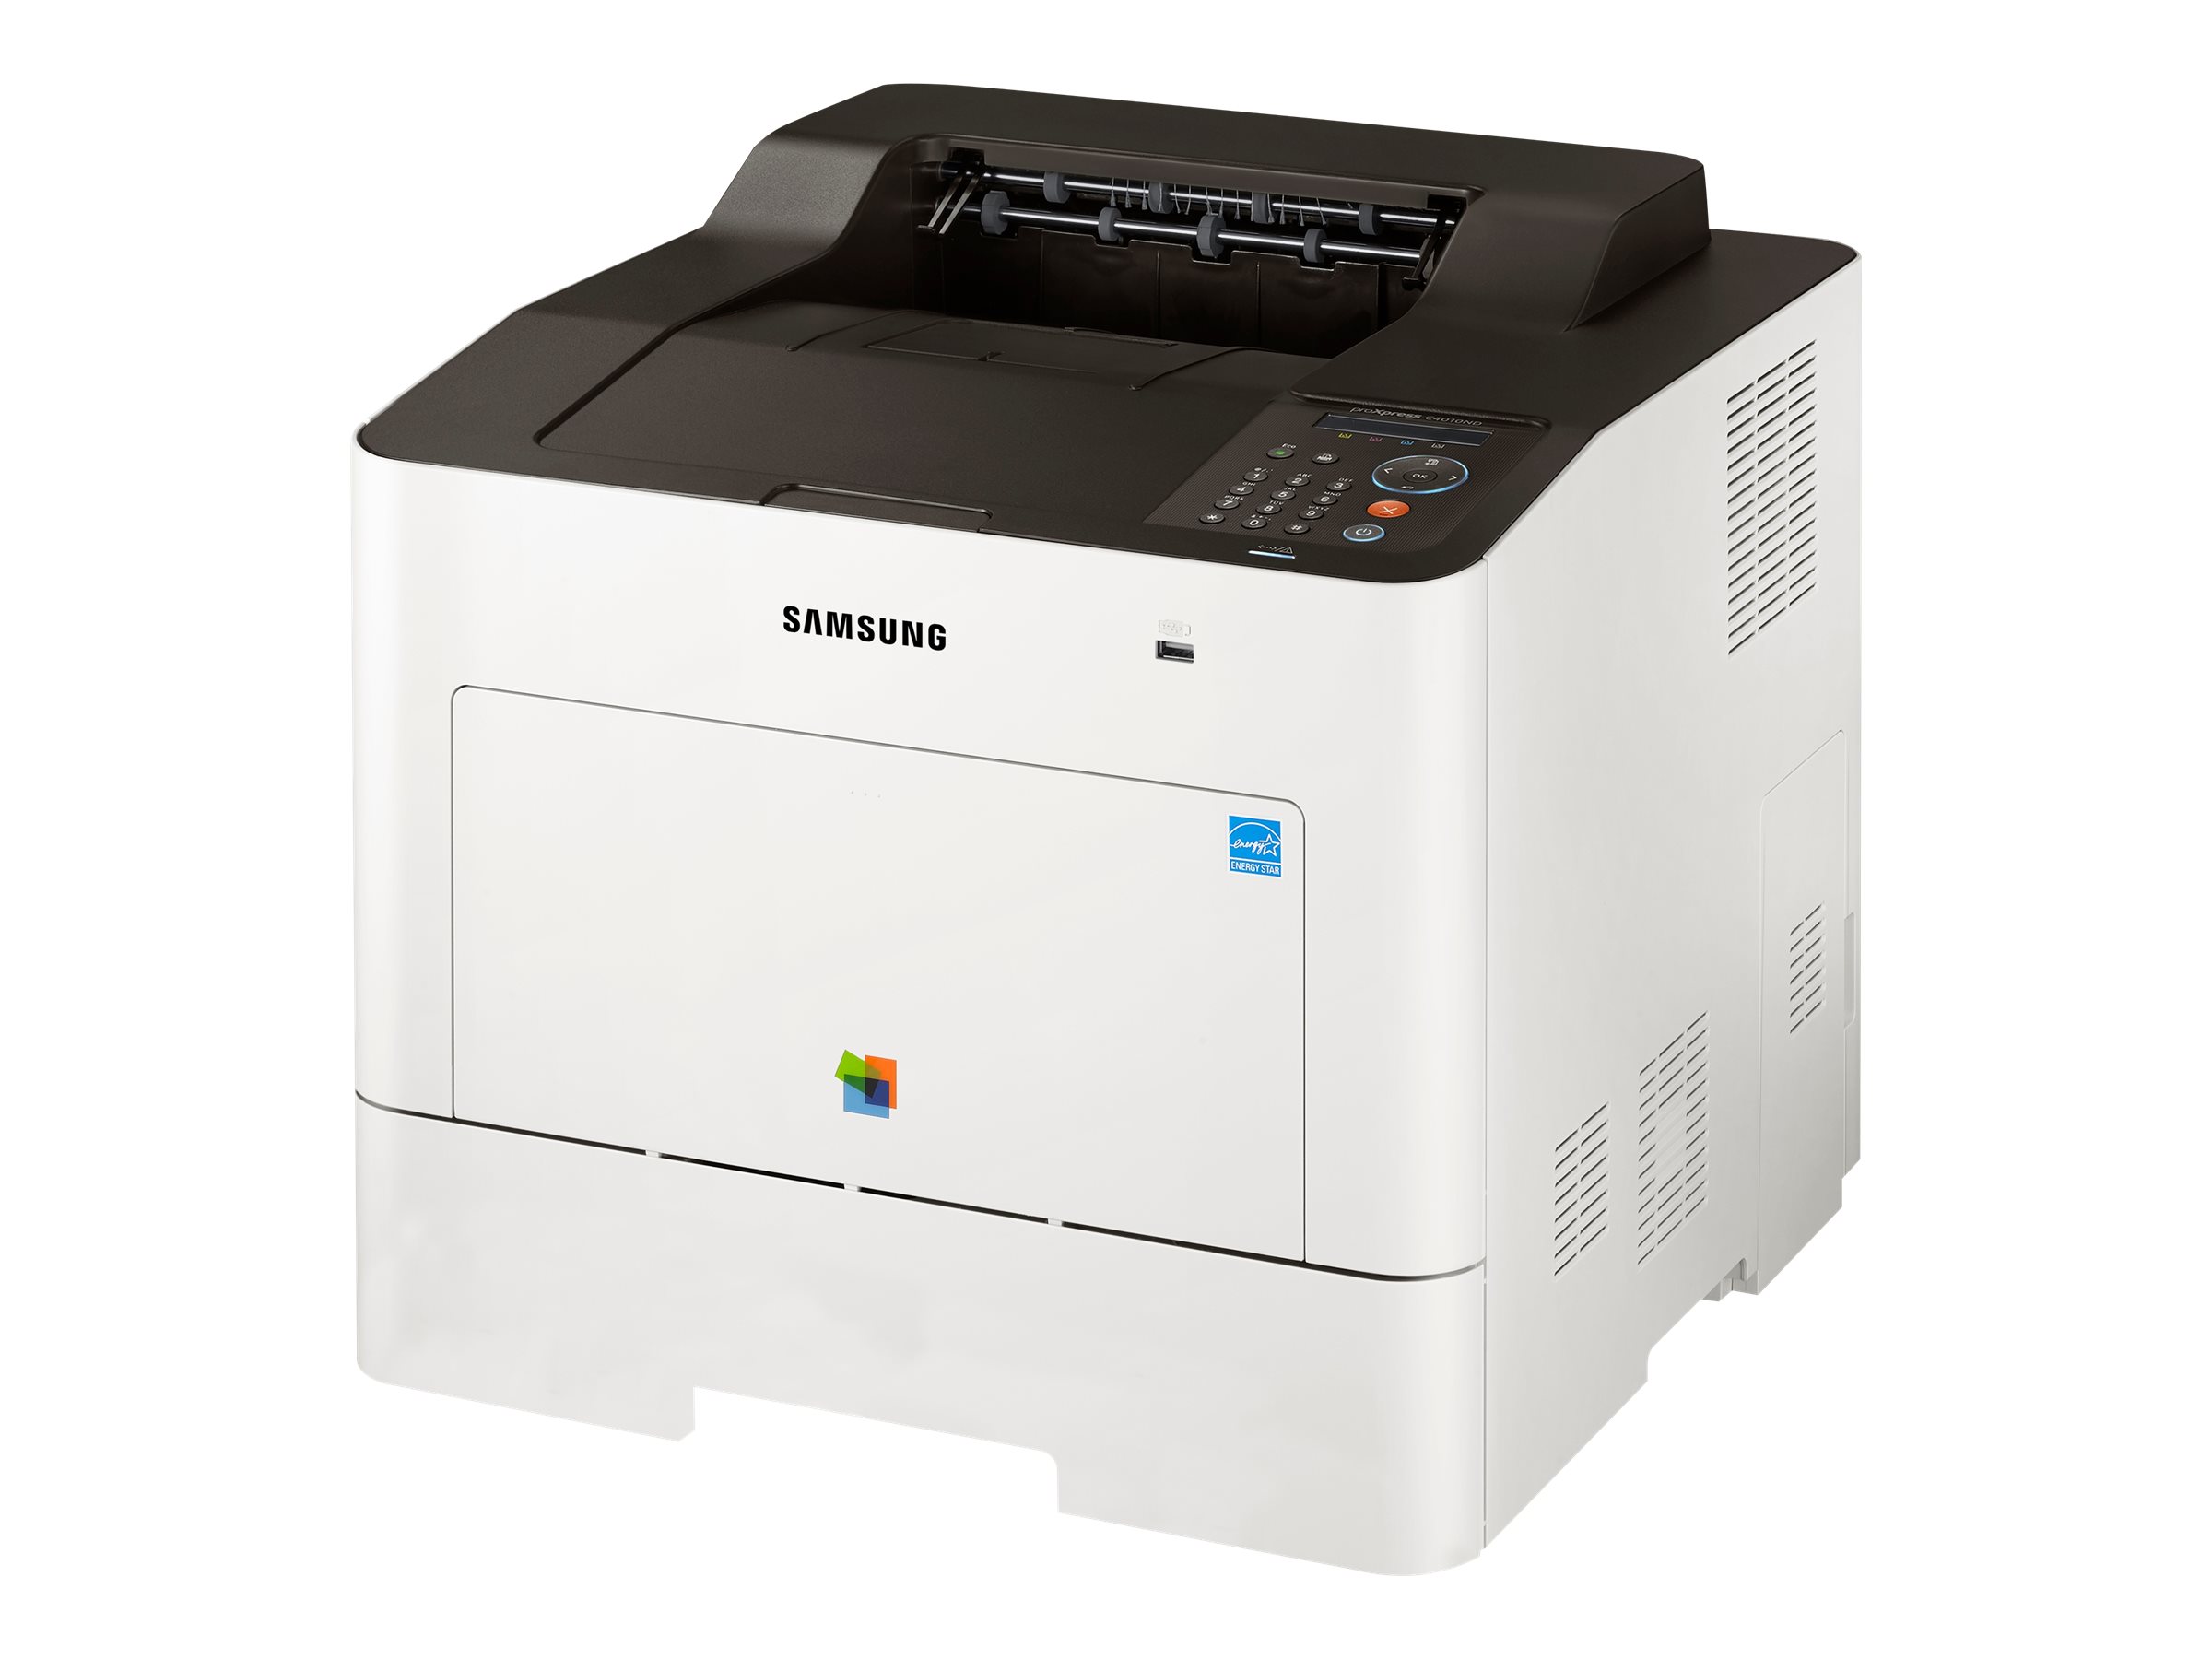 Samsung ProXpress SL-C4012 Color Laser Printer series